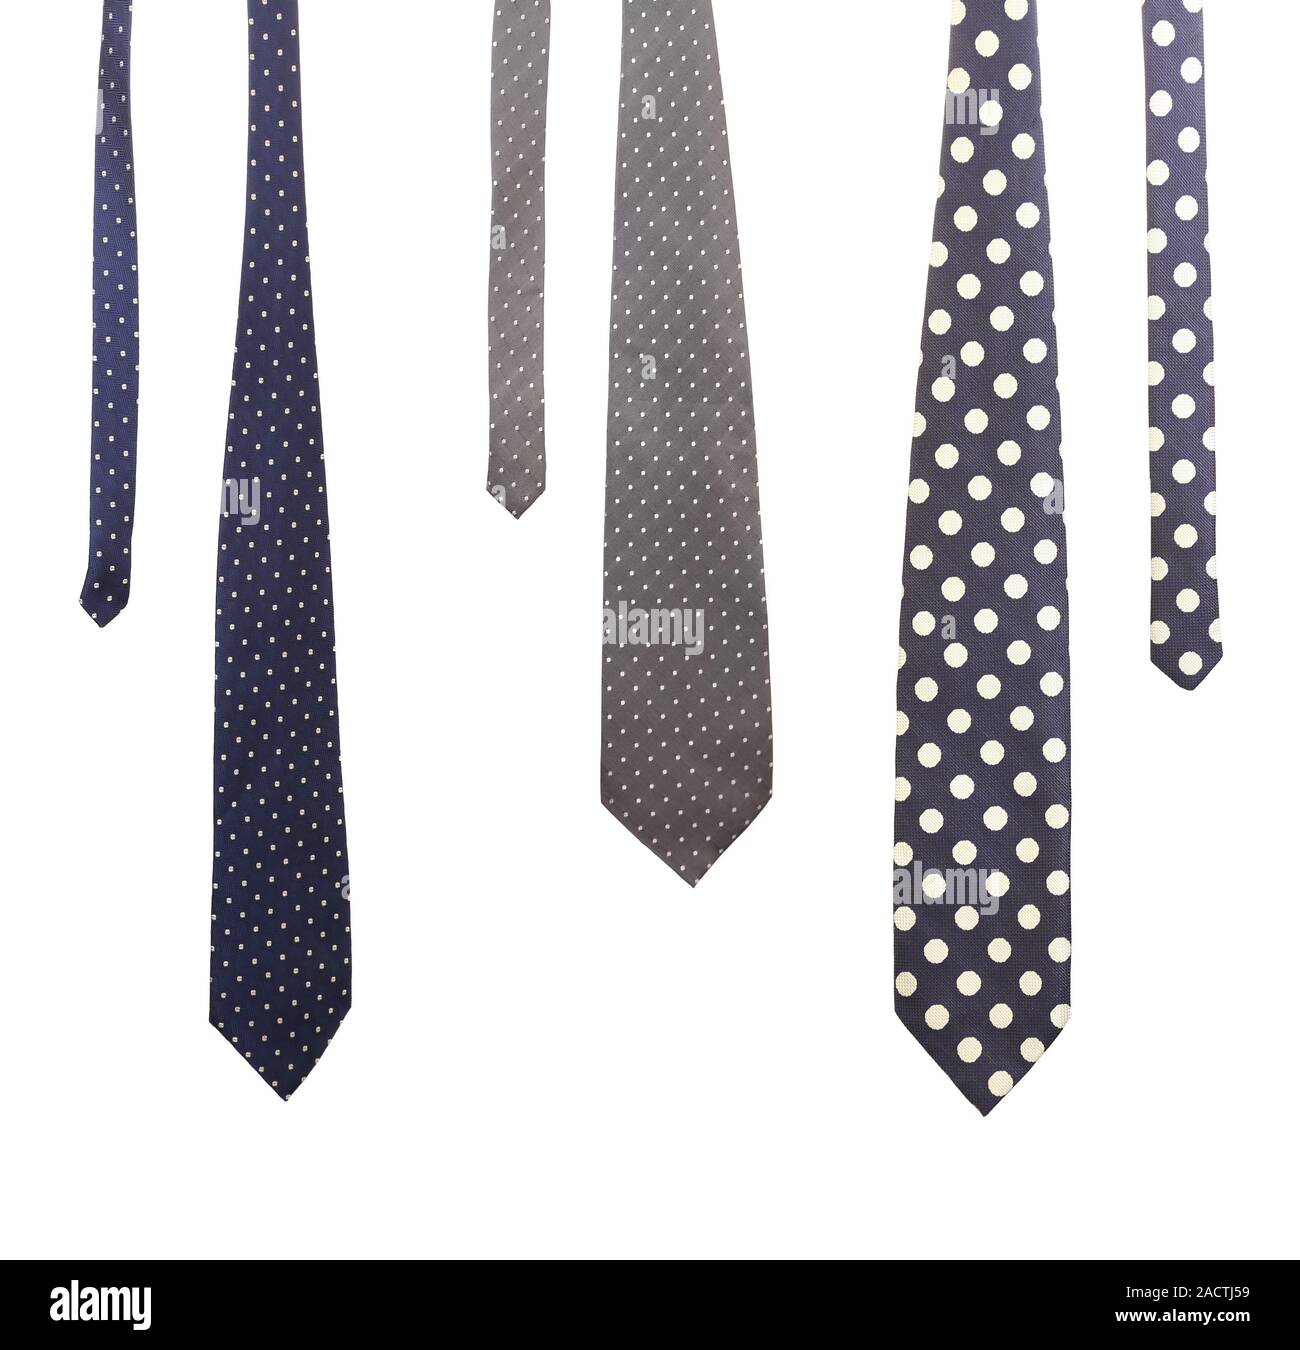 Three multi-colored ties. Stock Photo